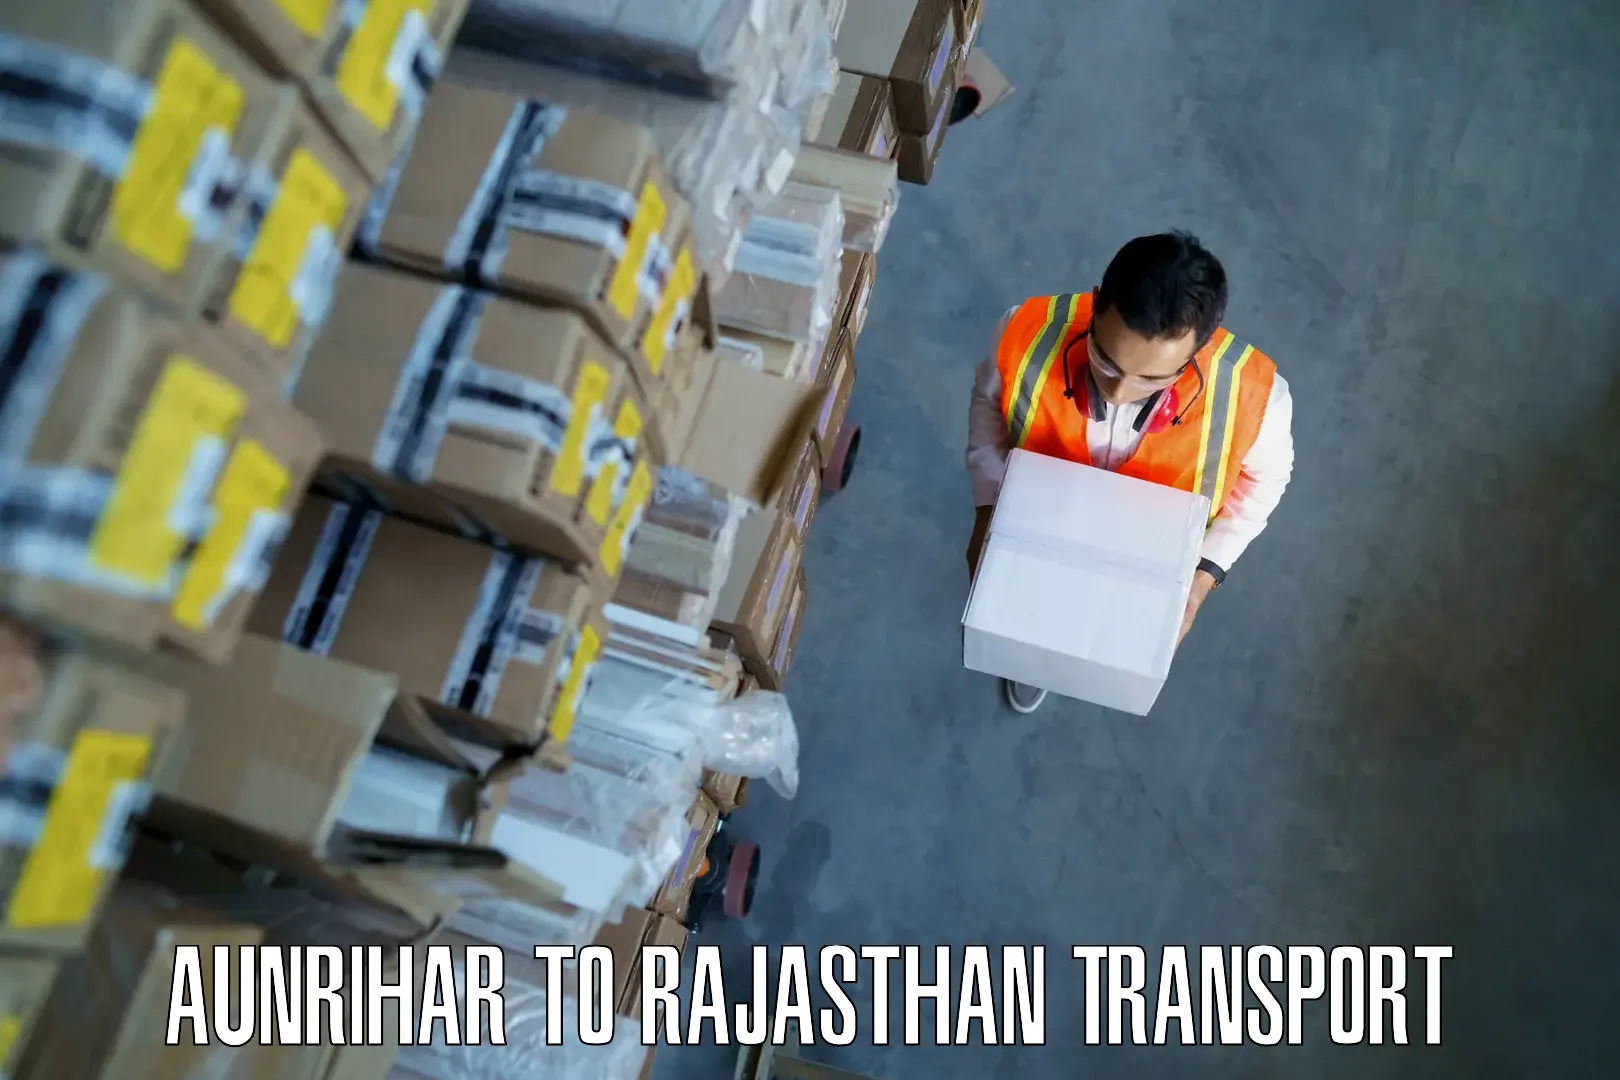 Truck transport companies in India Aunrihar to Asind